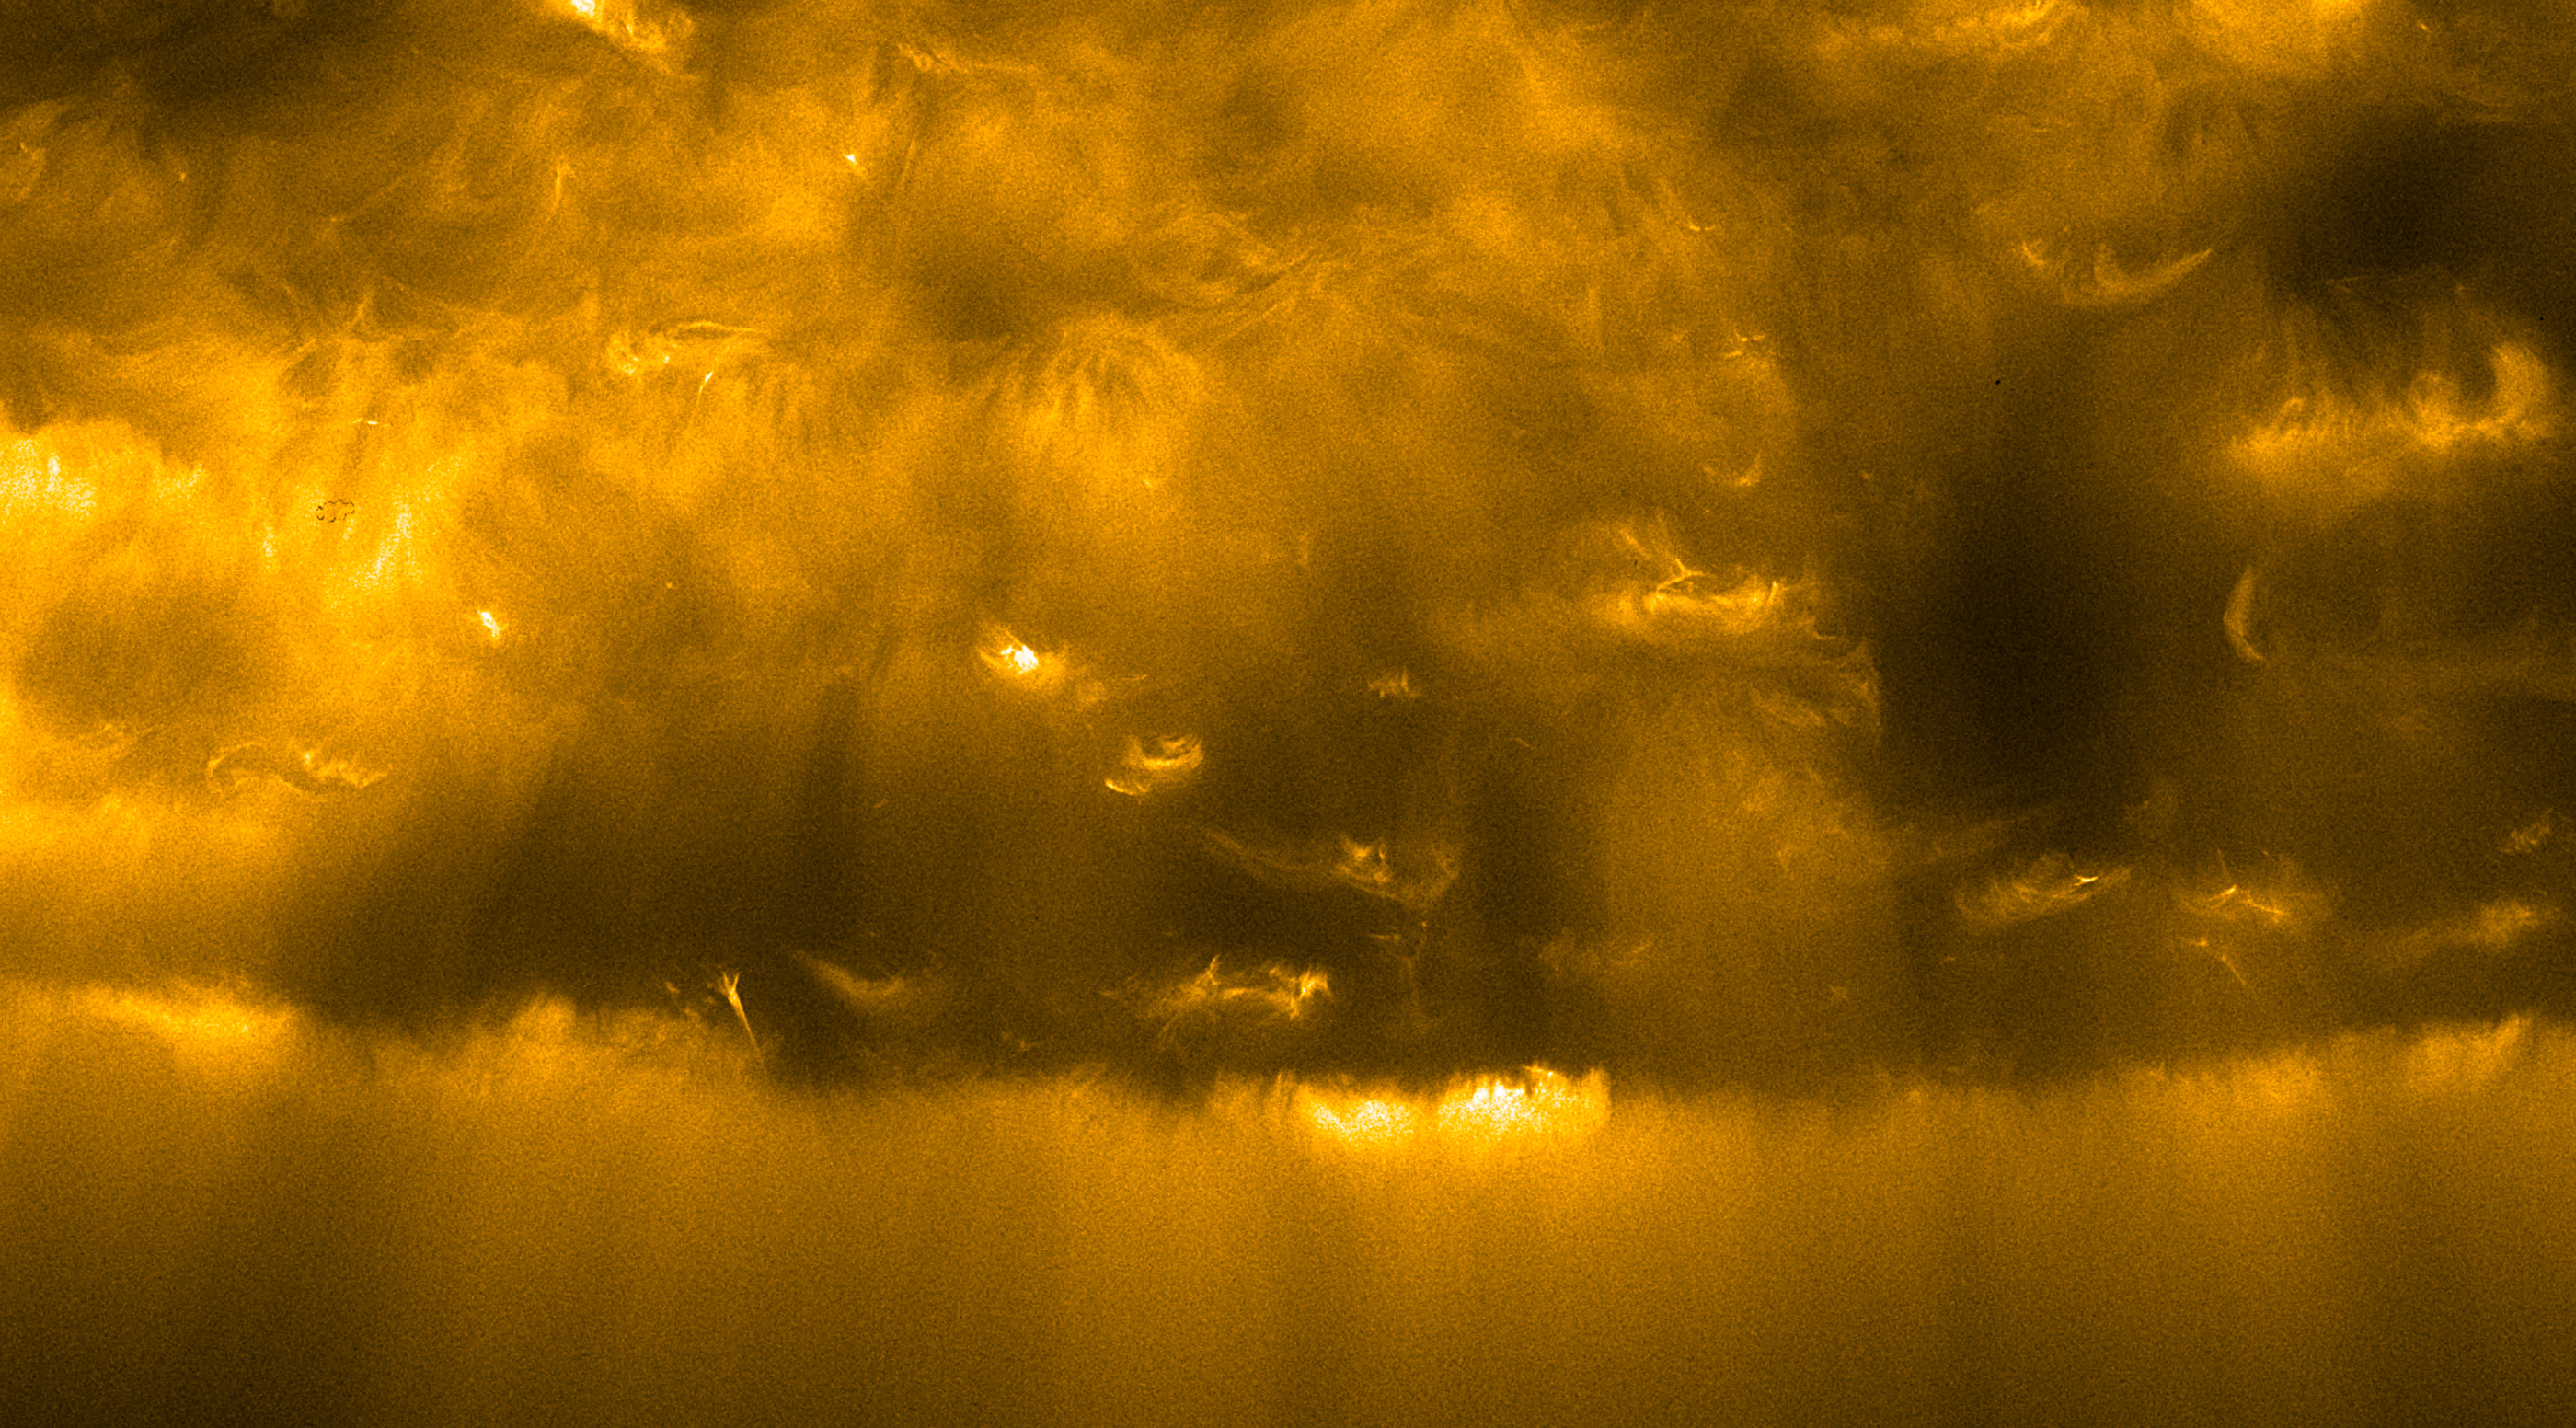 Le pôle Sud du Soleil observé par la sonde Solar Orbiter. © ESA, Nasa, Solar Orbiter Science Team